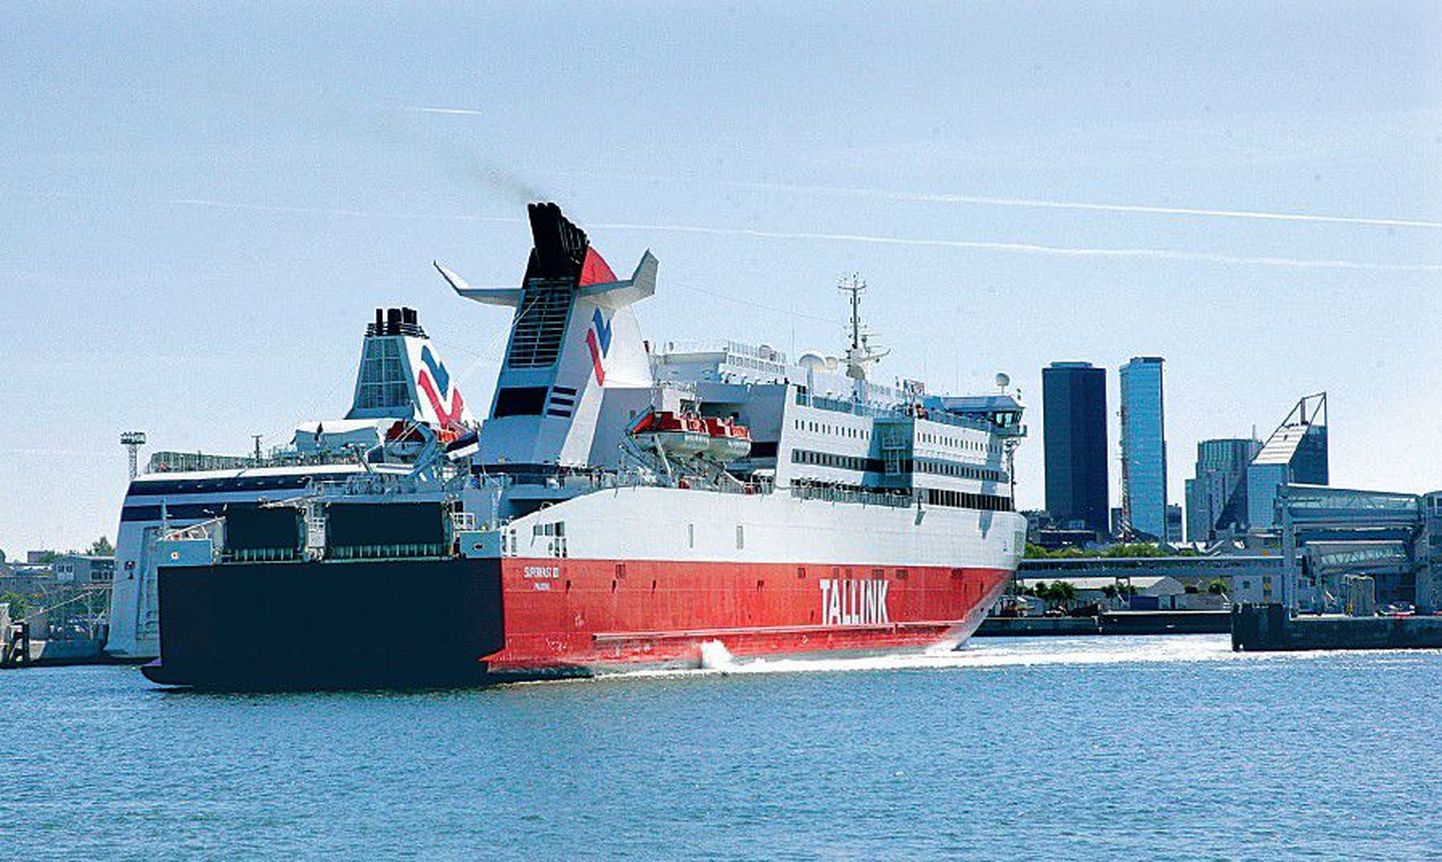 Корабль компании Tallink.